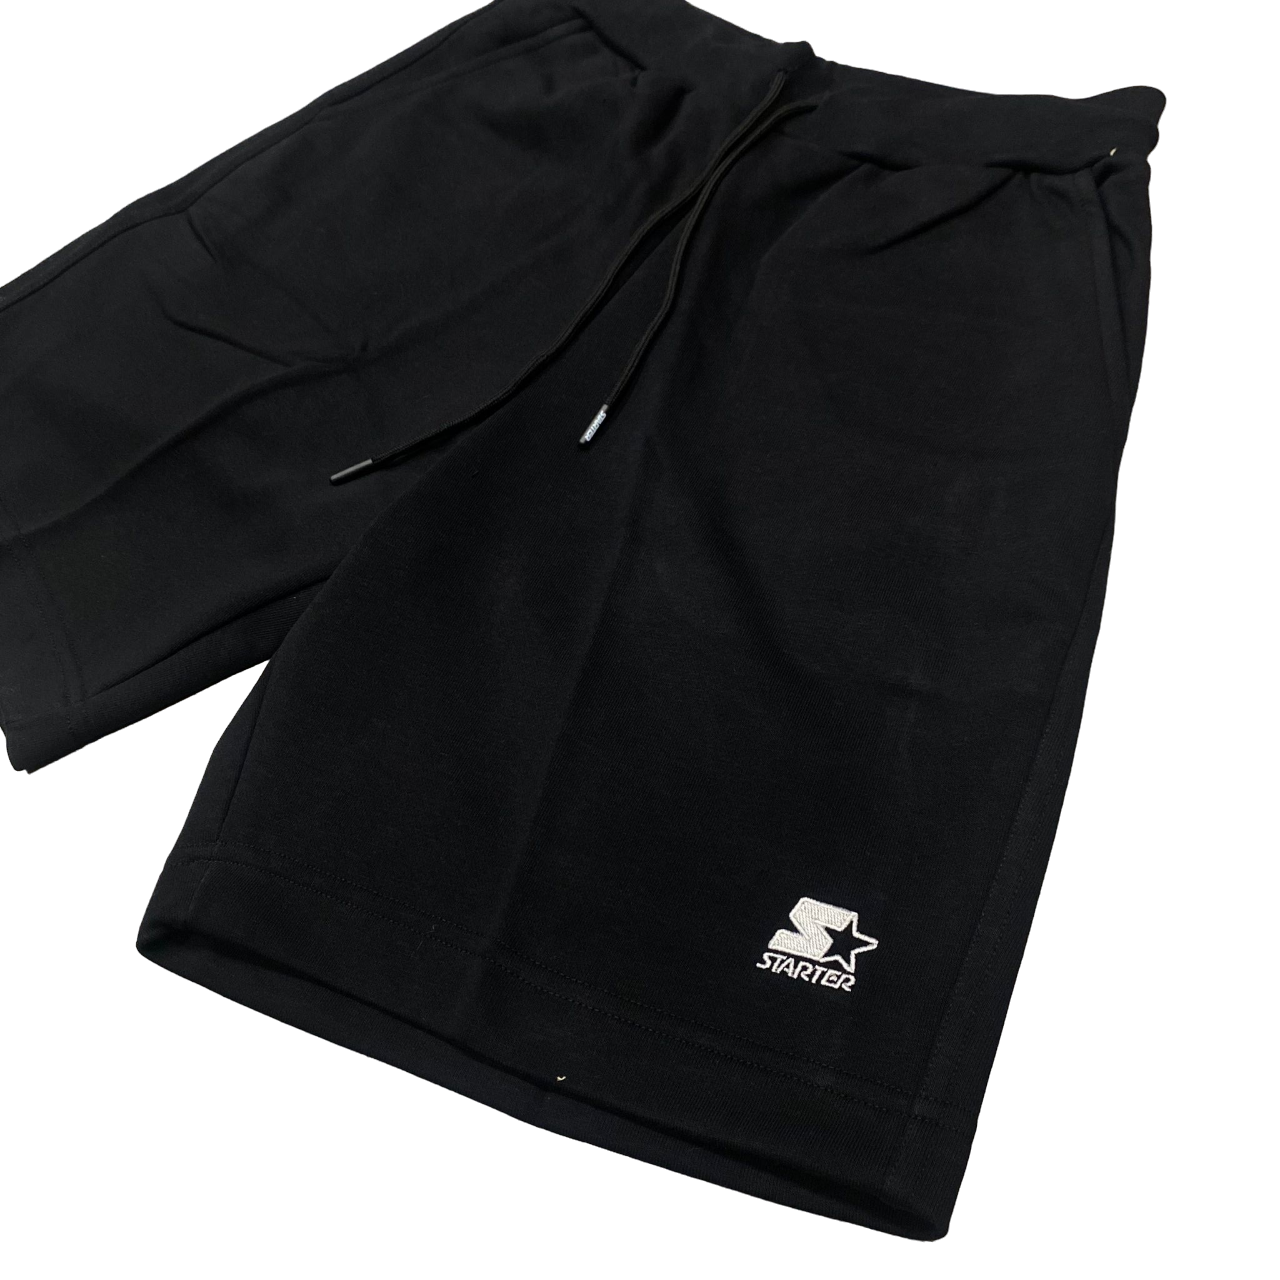 Starter pantaloncino sportivo da uomo in cotone con logo ricamato 74038 nero